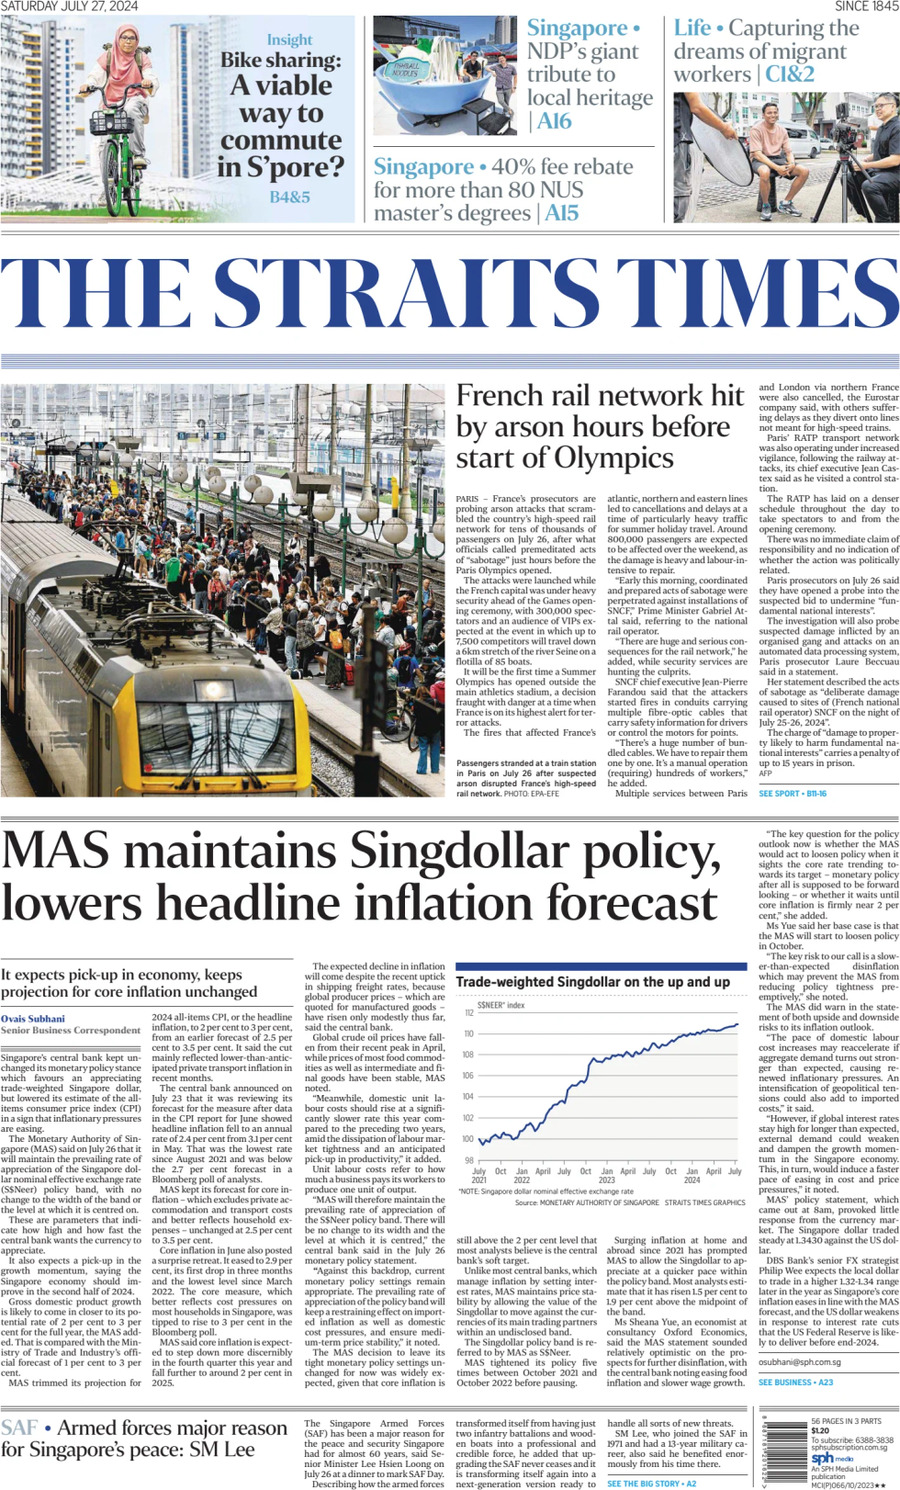 Prima Pagina The Straits Times 27/07/2024